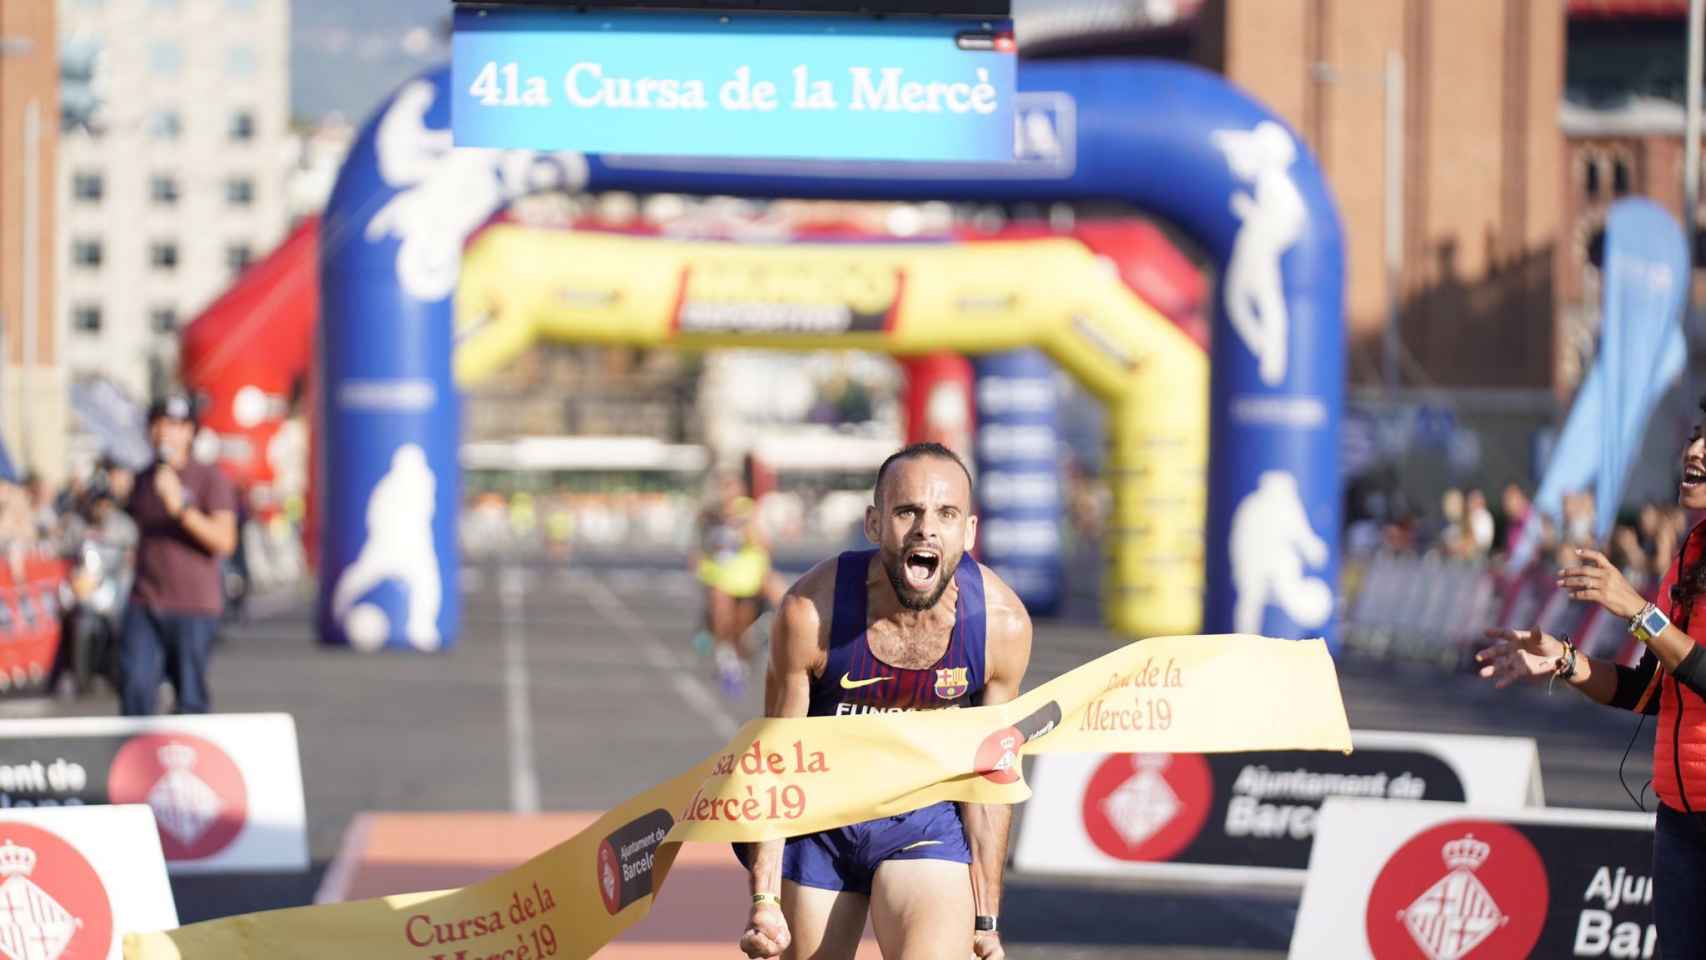 Artur Bossy Anguera, primero en cruzar la línea de meta en la Cursa de la Mercè / @ARTURBOSSY